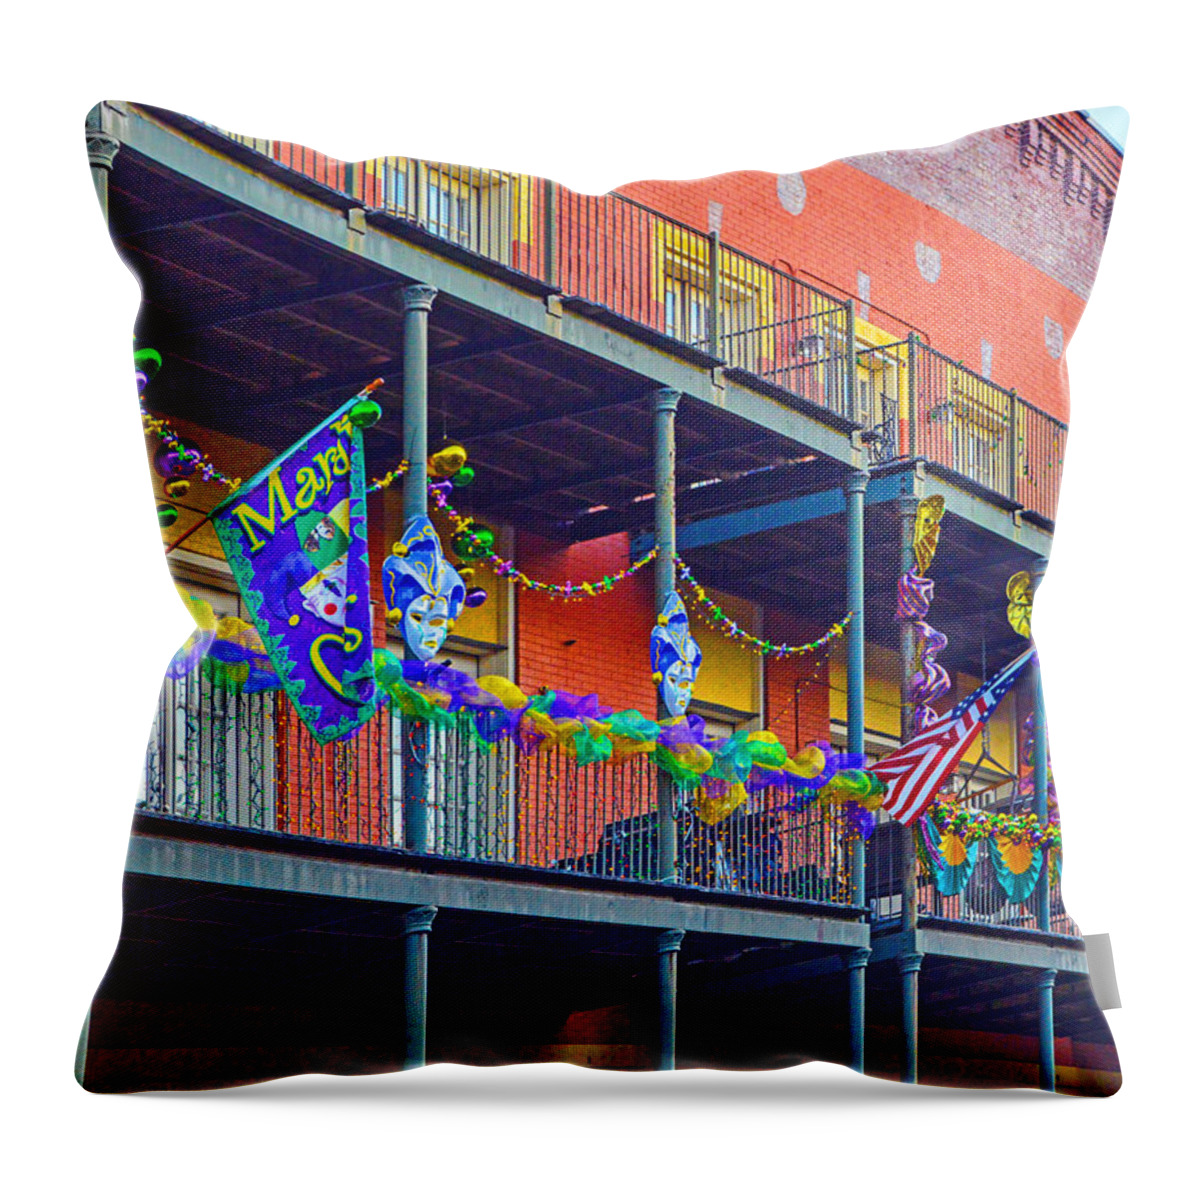 Alabama Throw Pillow featuring the photograph Mattress Factory Mardi Gras Railing in Mobile alabama by Michael Thomas